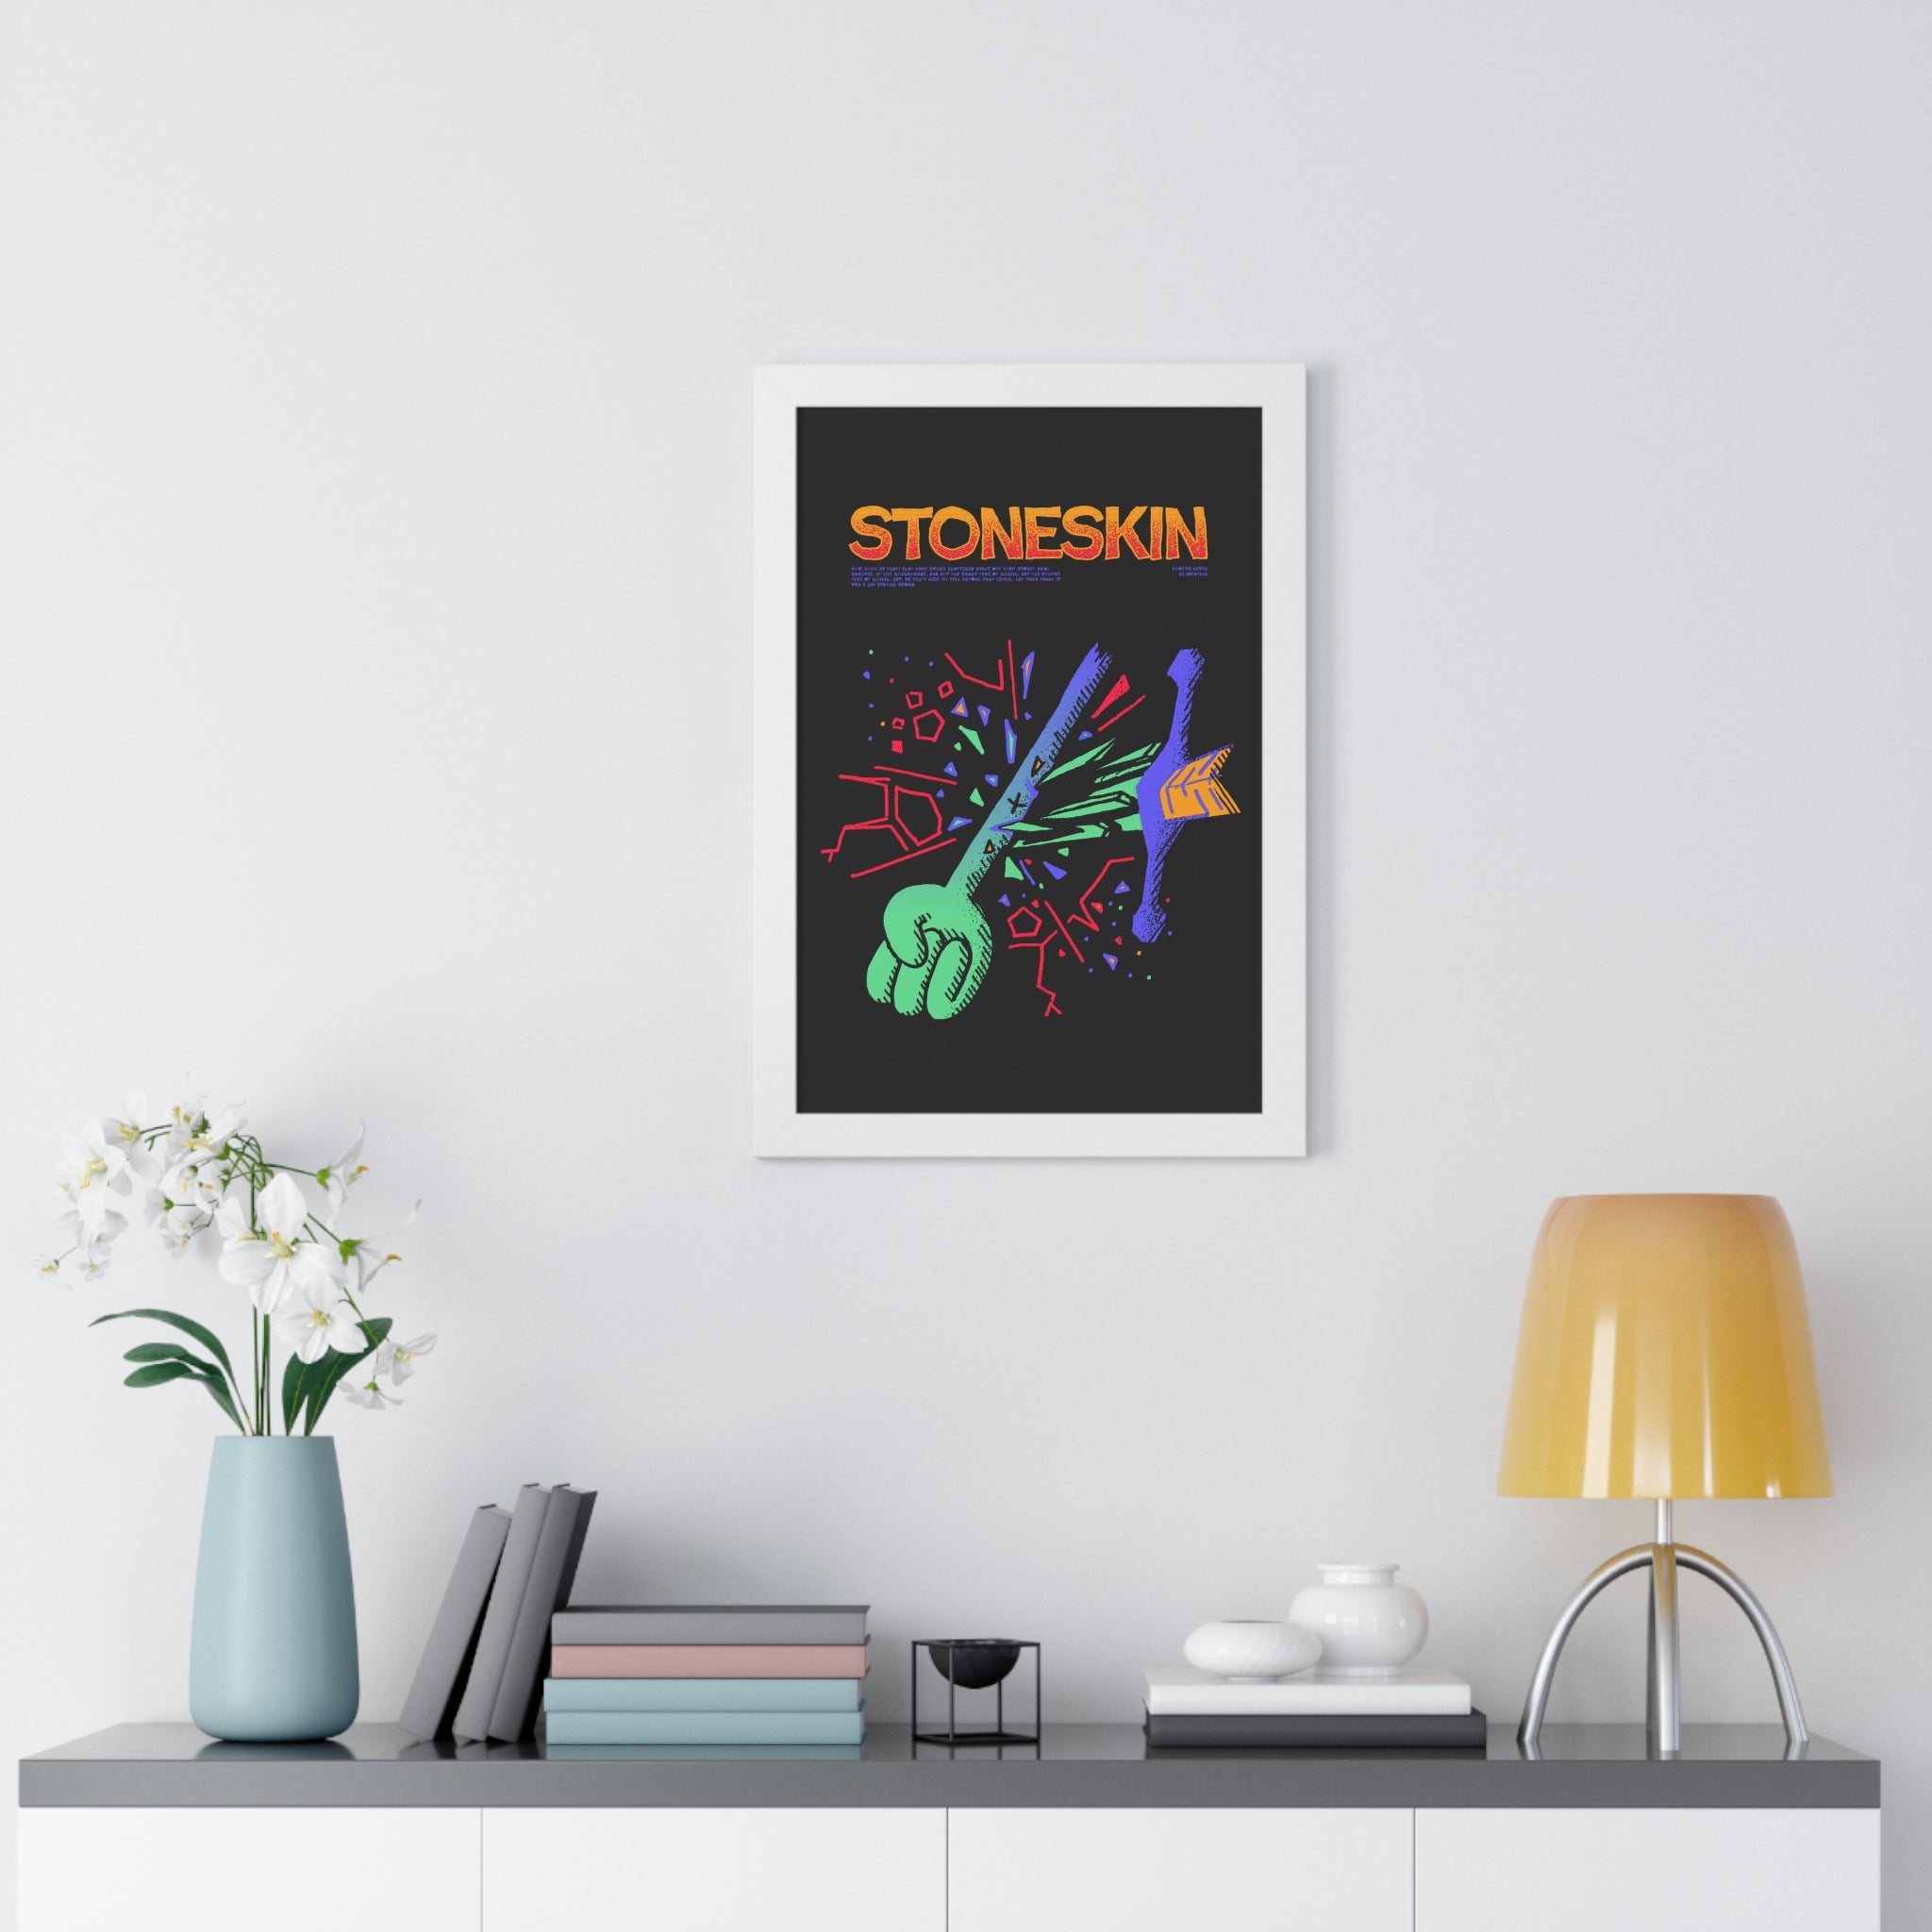 Stoneskin | Framed Poster - Framed Poster - Ace of Gnomes - 35200638763043620939